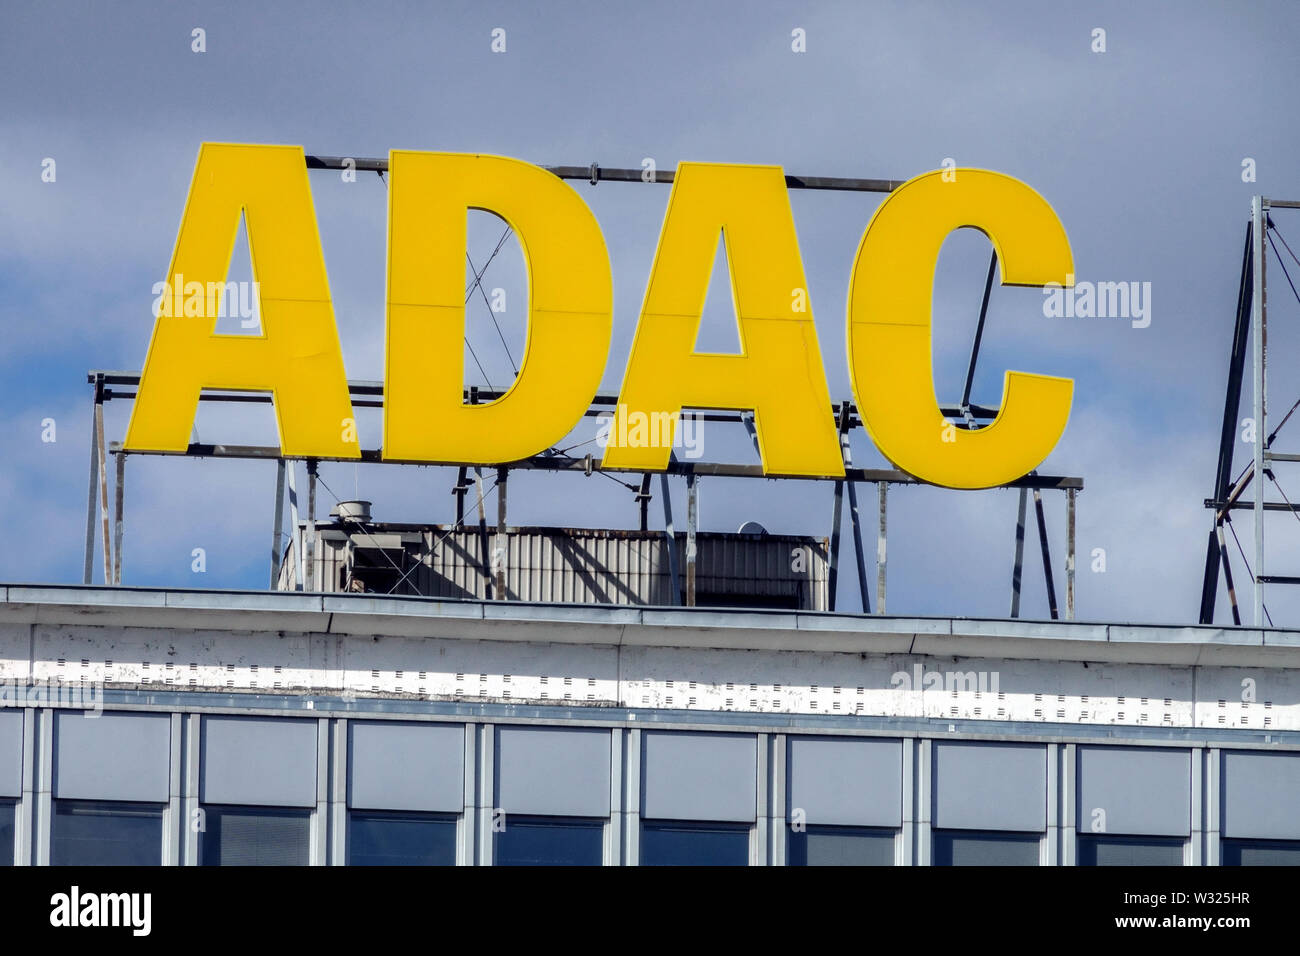 ADAC logo on the building, Berlin Germany Stock Photo